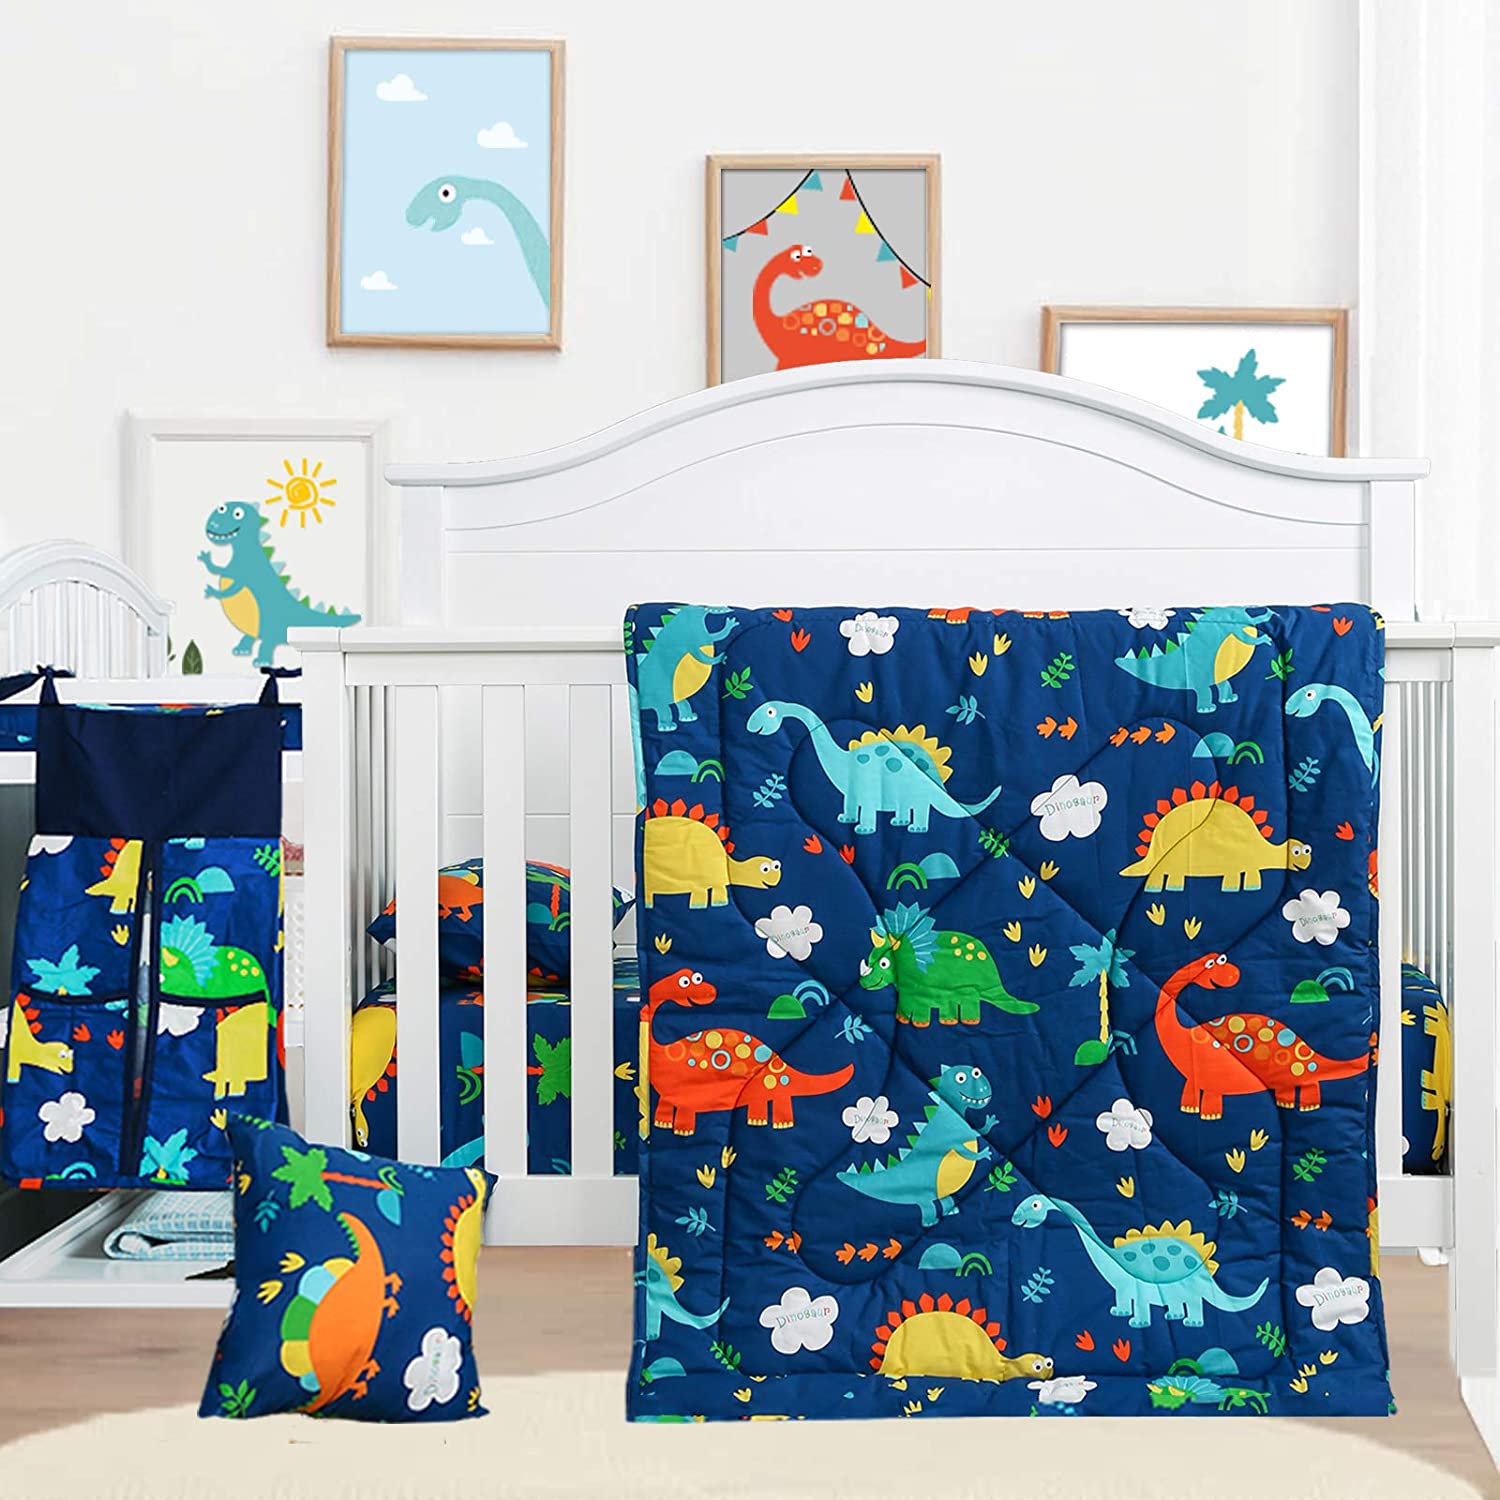 Cloele Breathable Microfiber Fabric Crib Comforter Set For Boys, 3-Piece